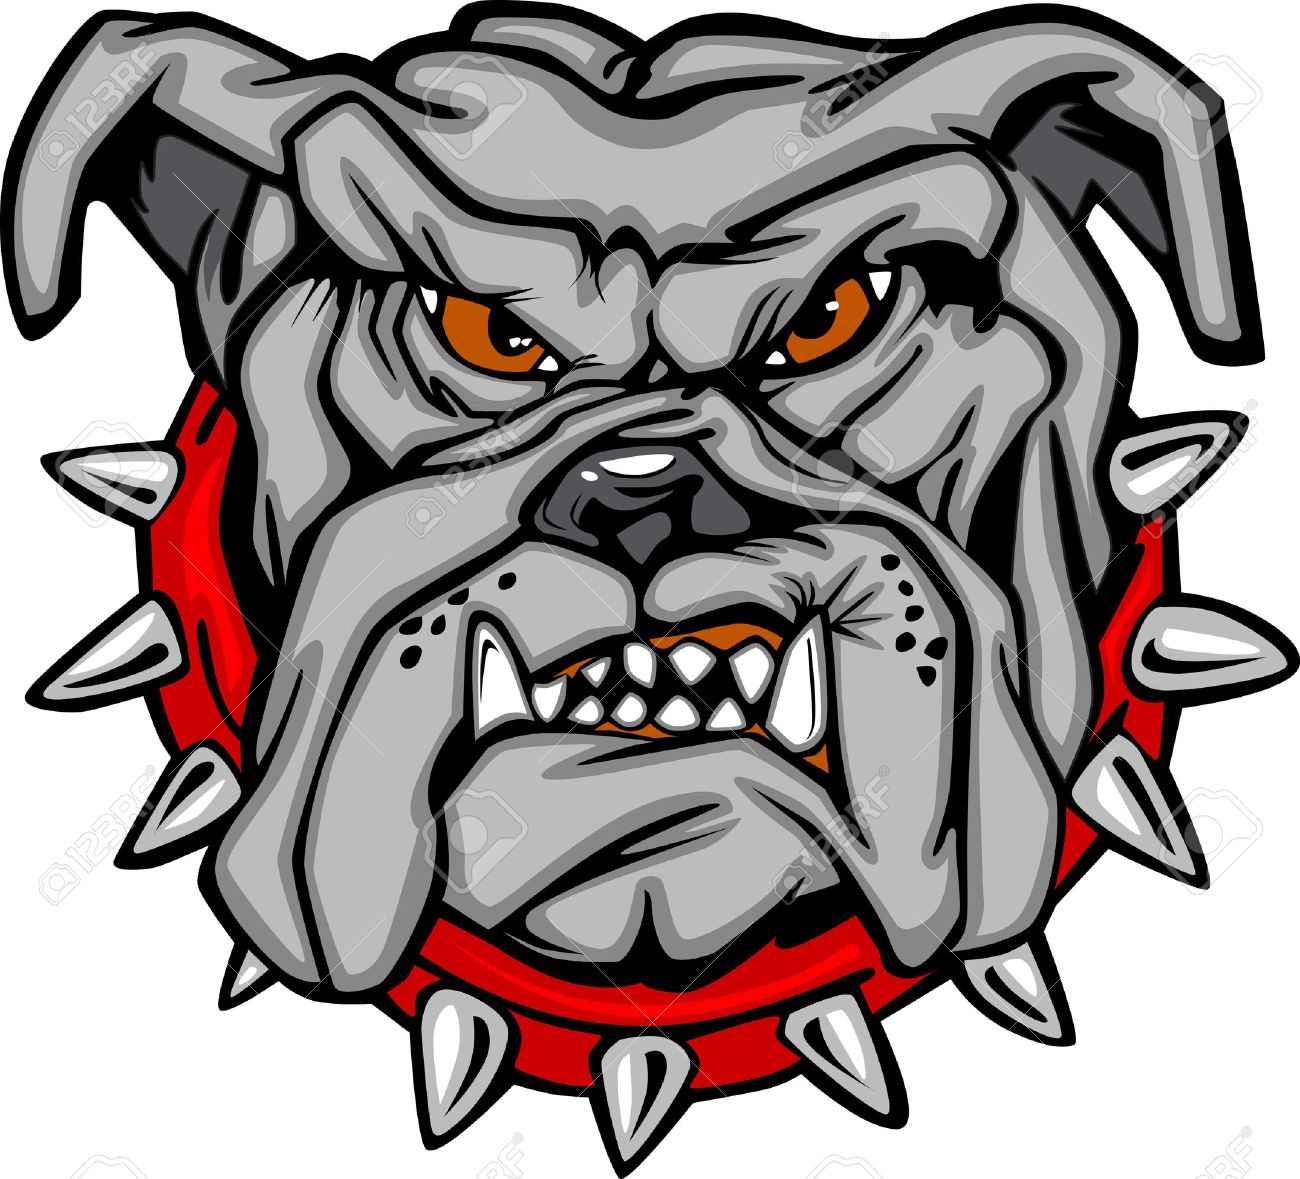 Bulldog Logos Clipart | Free download on ClipArtMag